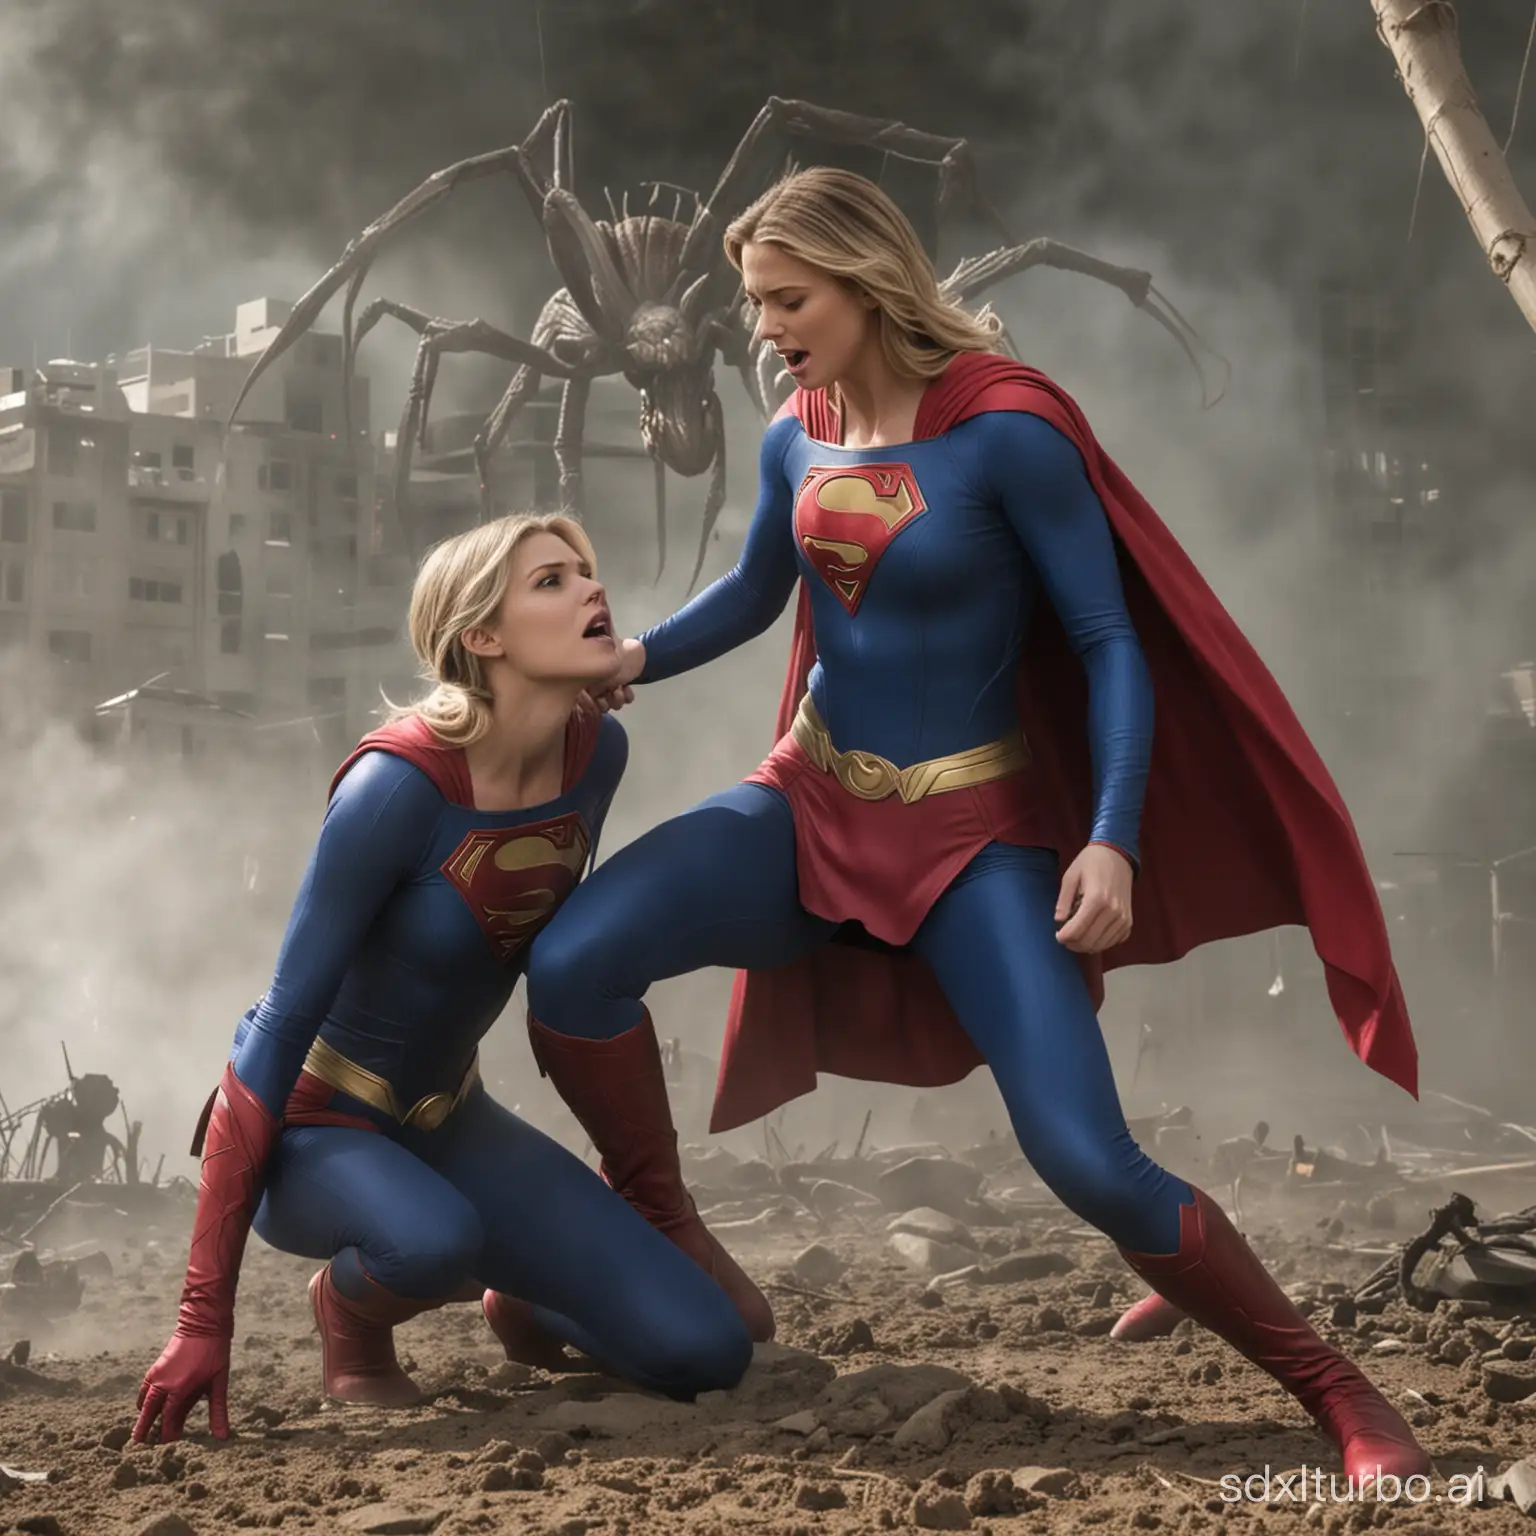 Supergirl, dressed as Superman, Huge arachnid engulfing, swallowing Supergirl Giant spider looming over Supergirl, leaning over, hunched over Supergirl